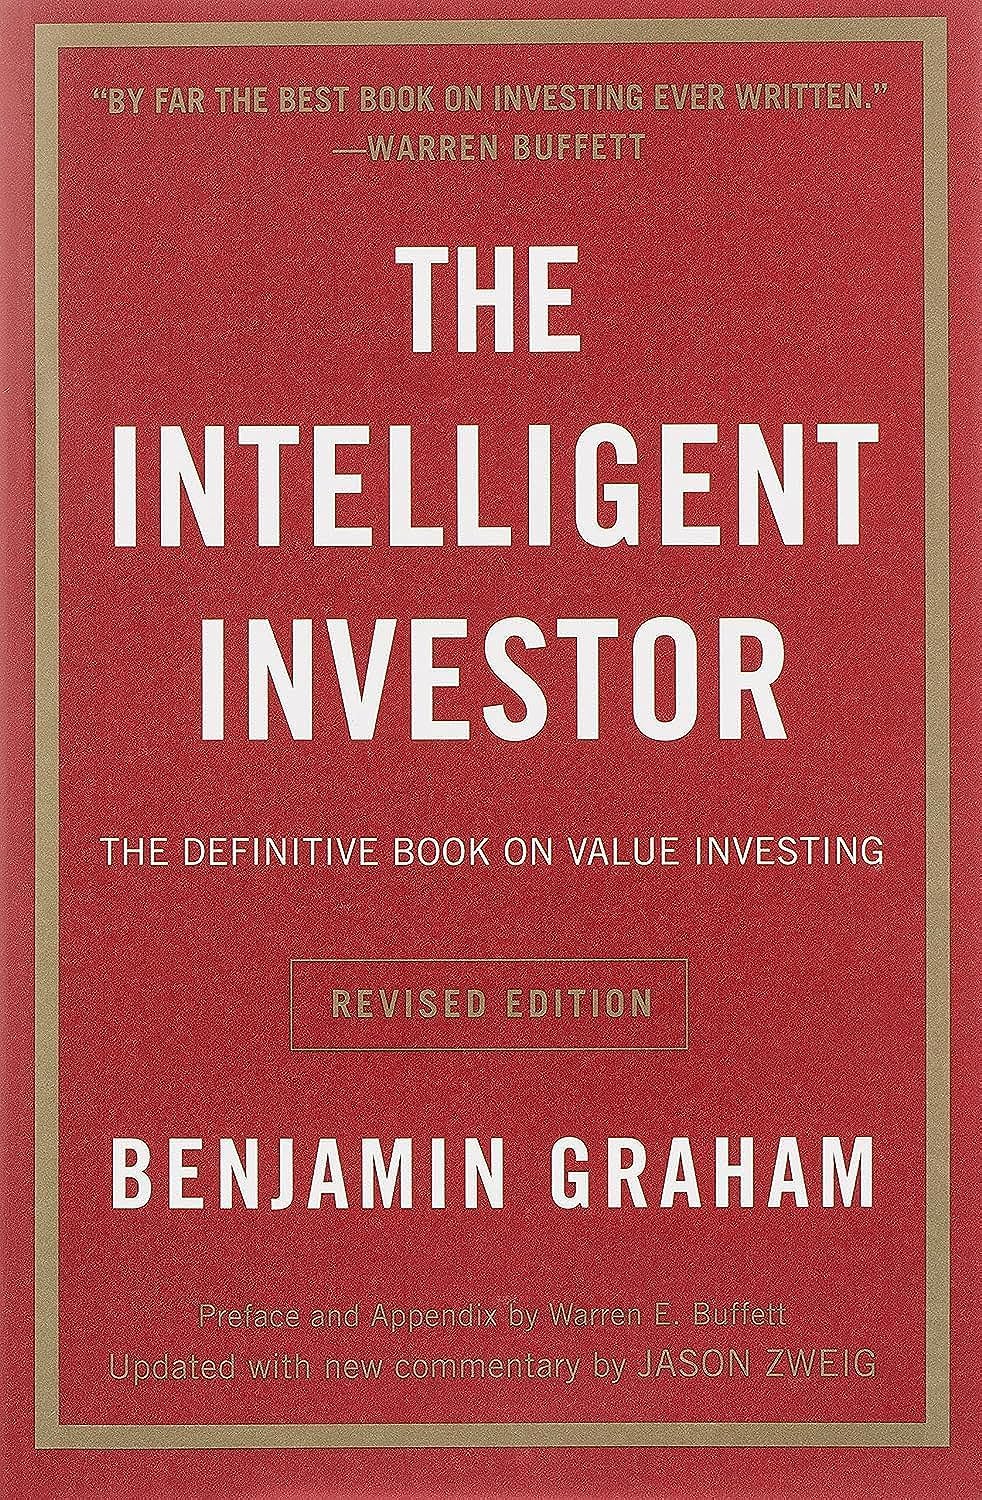 8. Benjamin Graham - 'The Intelligent Investor' 📈